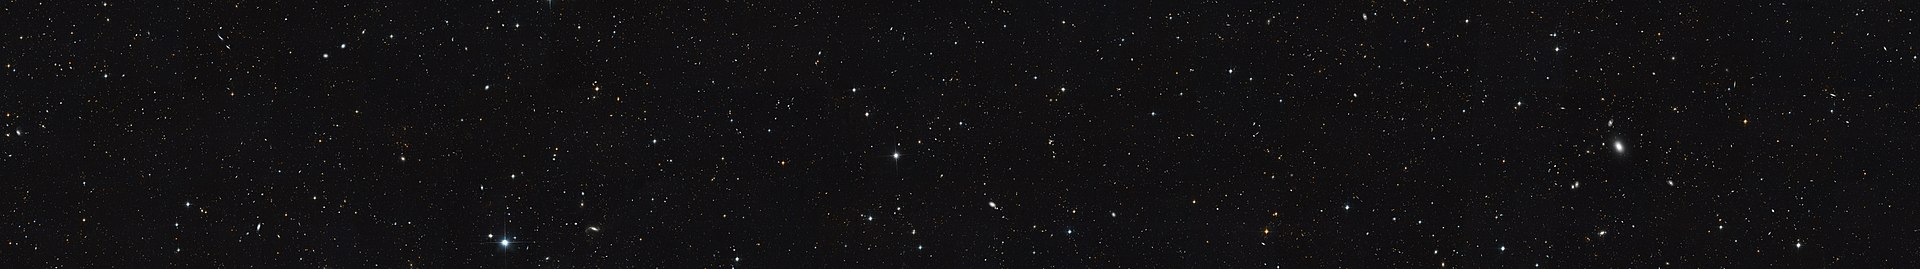 Hubble-galassie-universo